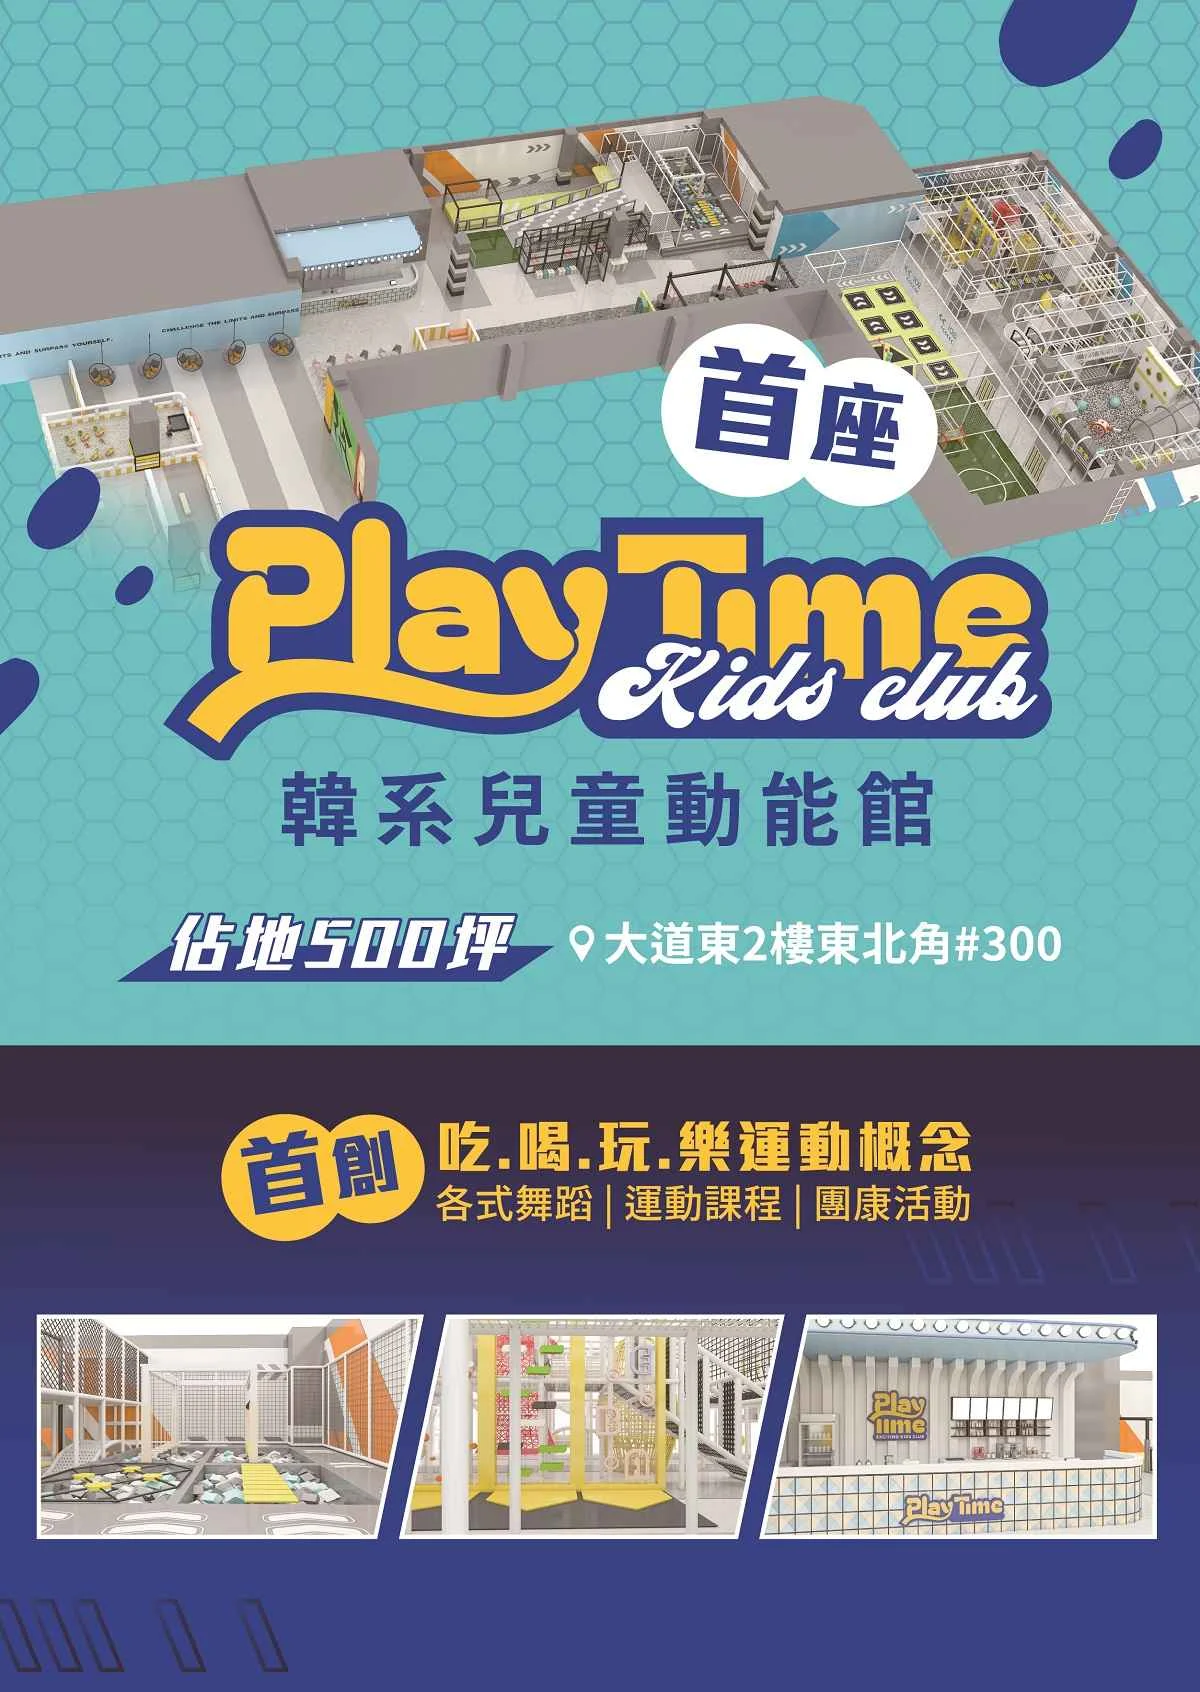 【skm Park Outlets】playtime Kids Club 新櫃登場，500坪室內動能樂園。